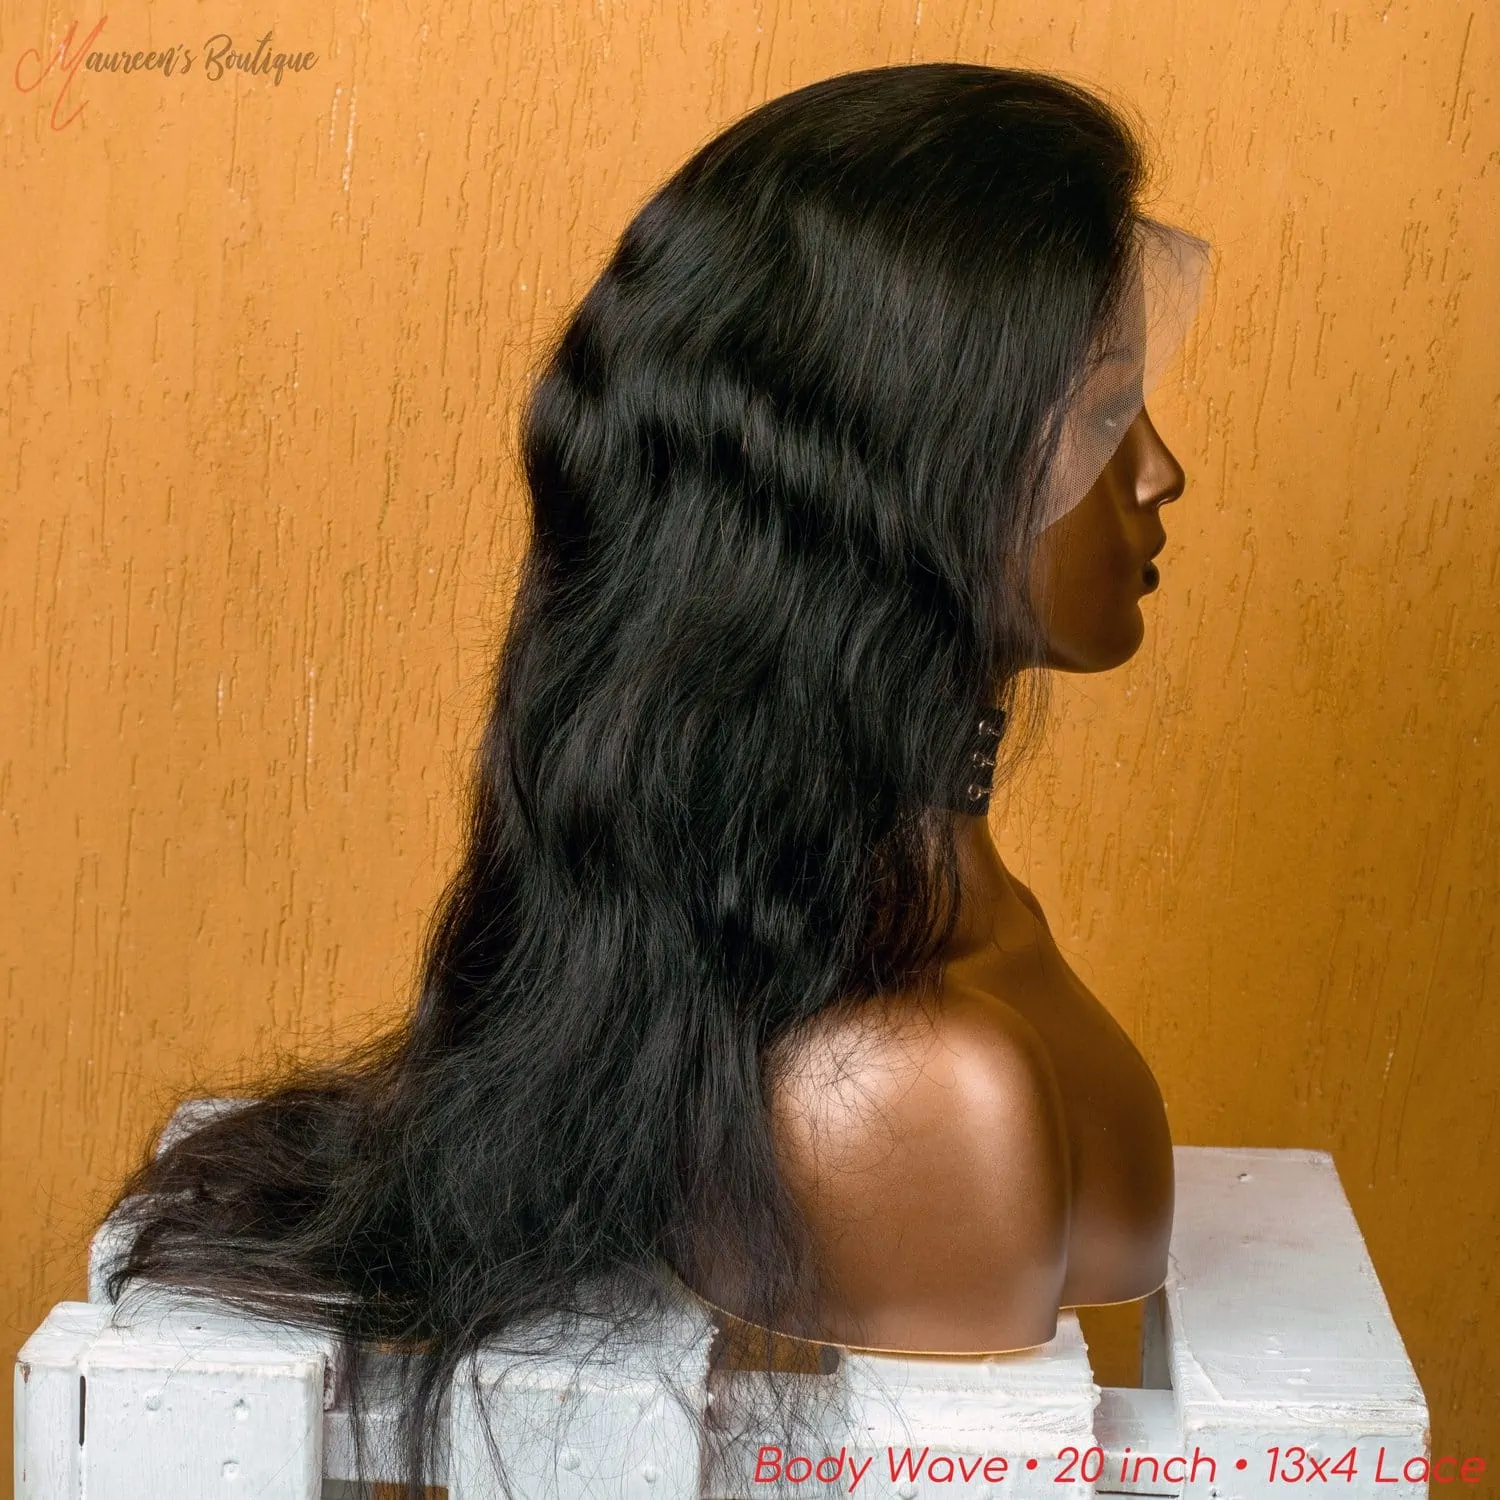 Body Wave 13x4 human hair wig 20 inch maureens.com 2